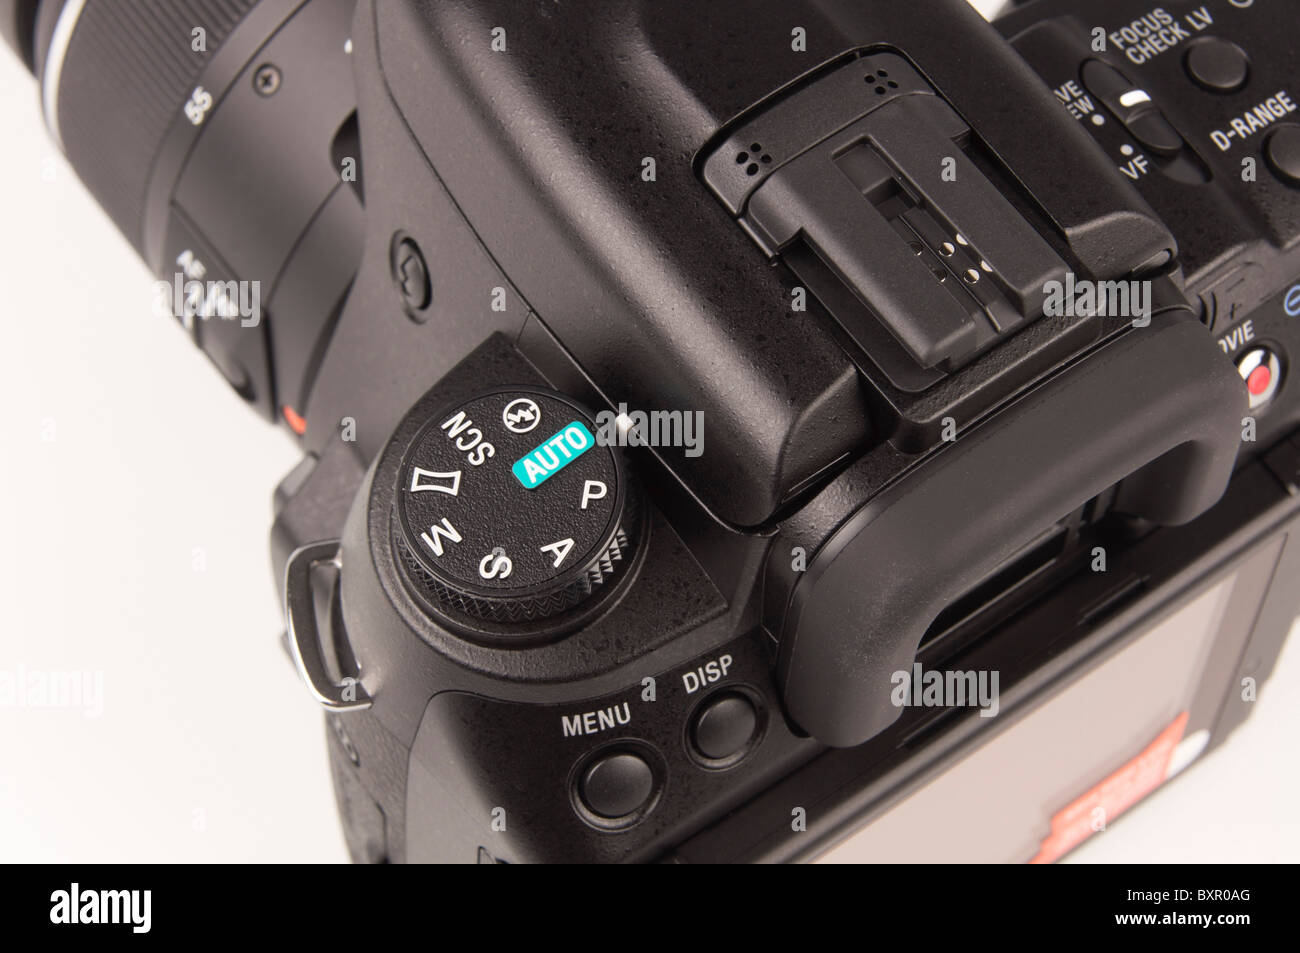 Sony Alpha 580 camera (2010) - digital SLR - mode setting dial Stock Photo